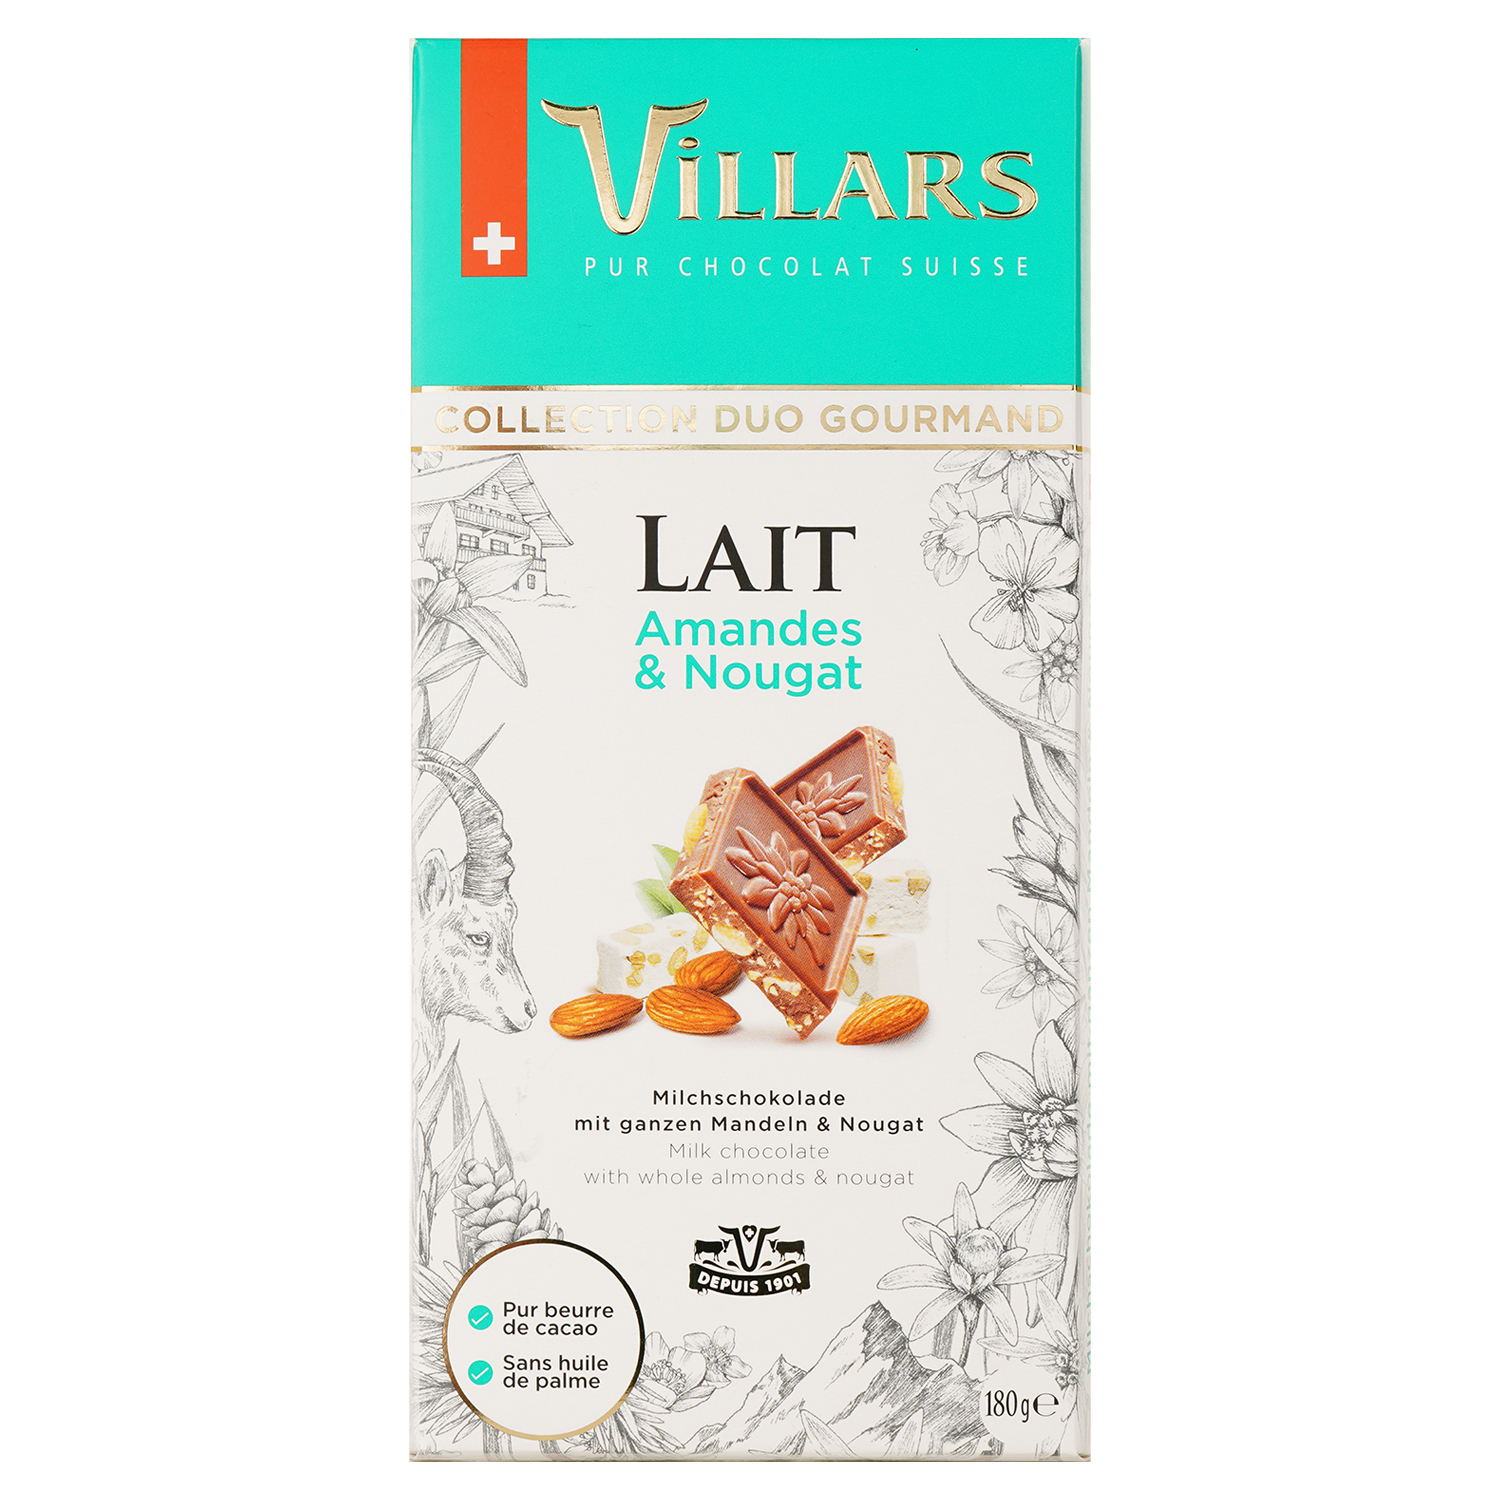 Молочний шоколад Villars Collection Duo Gourmand Lait Amandes & Nougat з мигдалем та нугою 180 г - фото 1